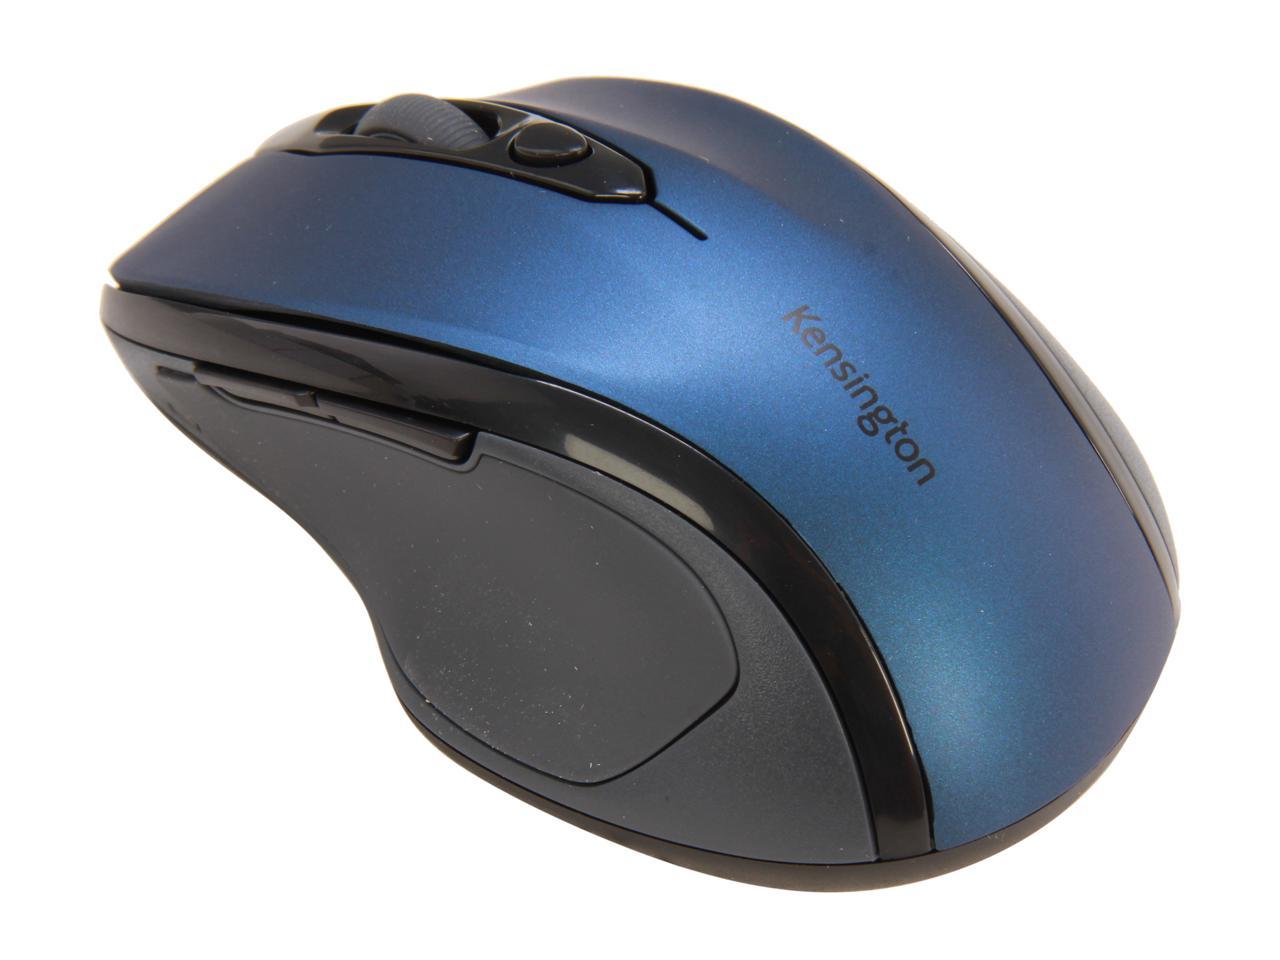 Kensington Pro Fit Mid-Size Mouse K72421AM Sapphire blue 1 x Wheel USB RF Wireless Optical 1750 dpi Mouse